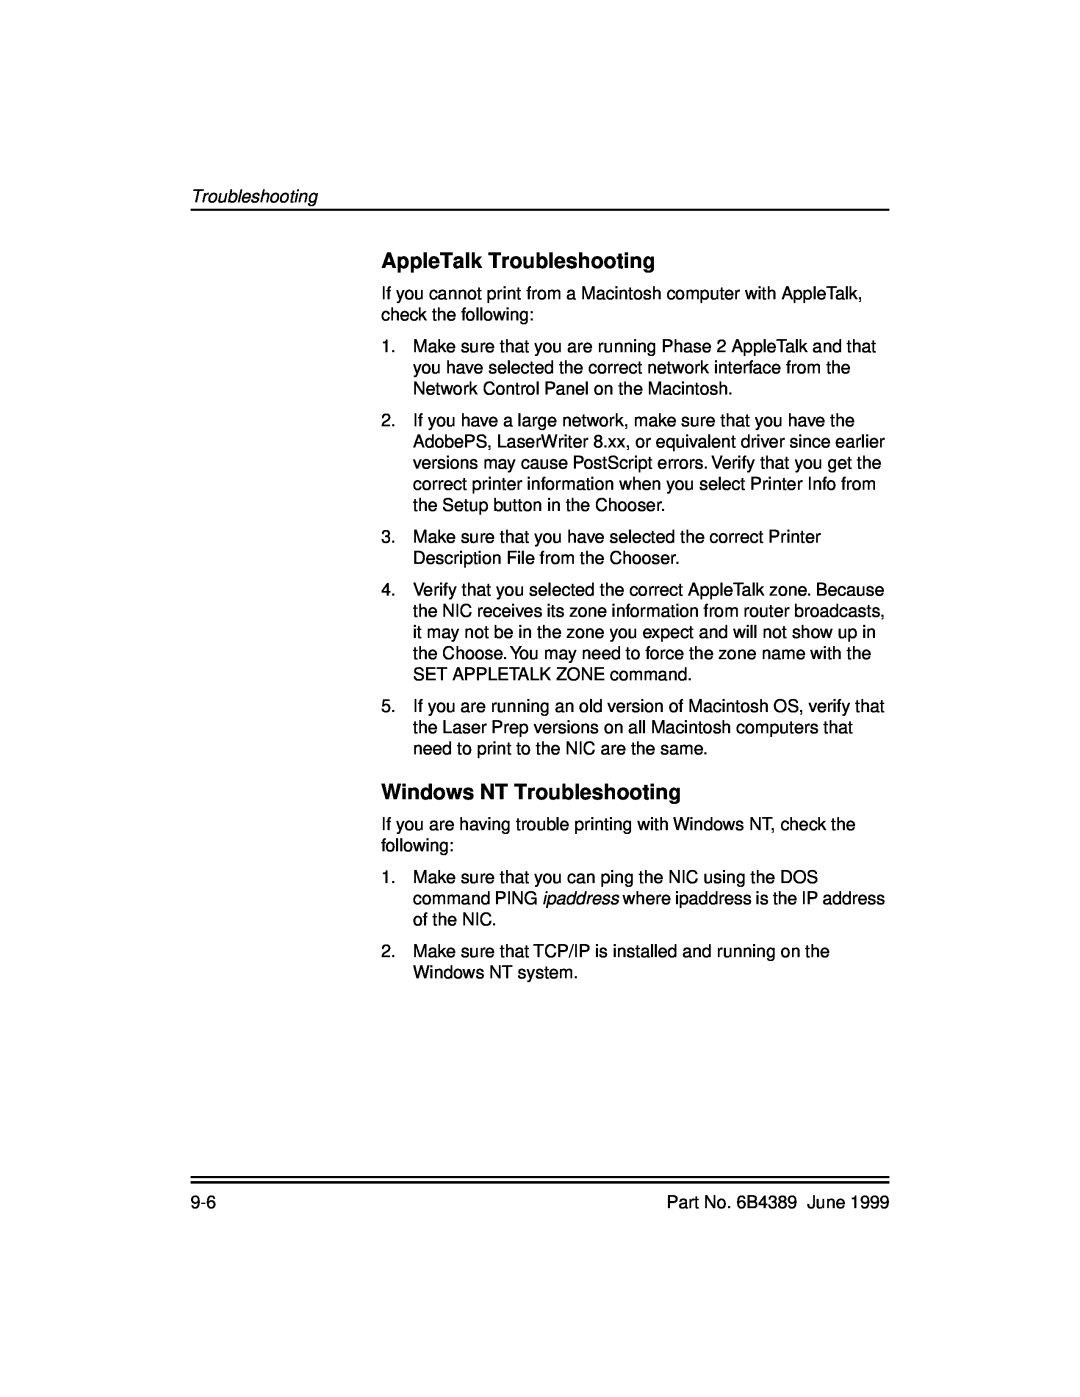 Kodak 8670, 8660 manual AppleTalk Troubleshooting, Windows NT Troubleshooting 